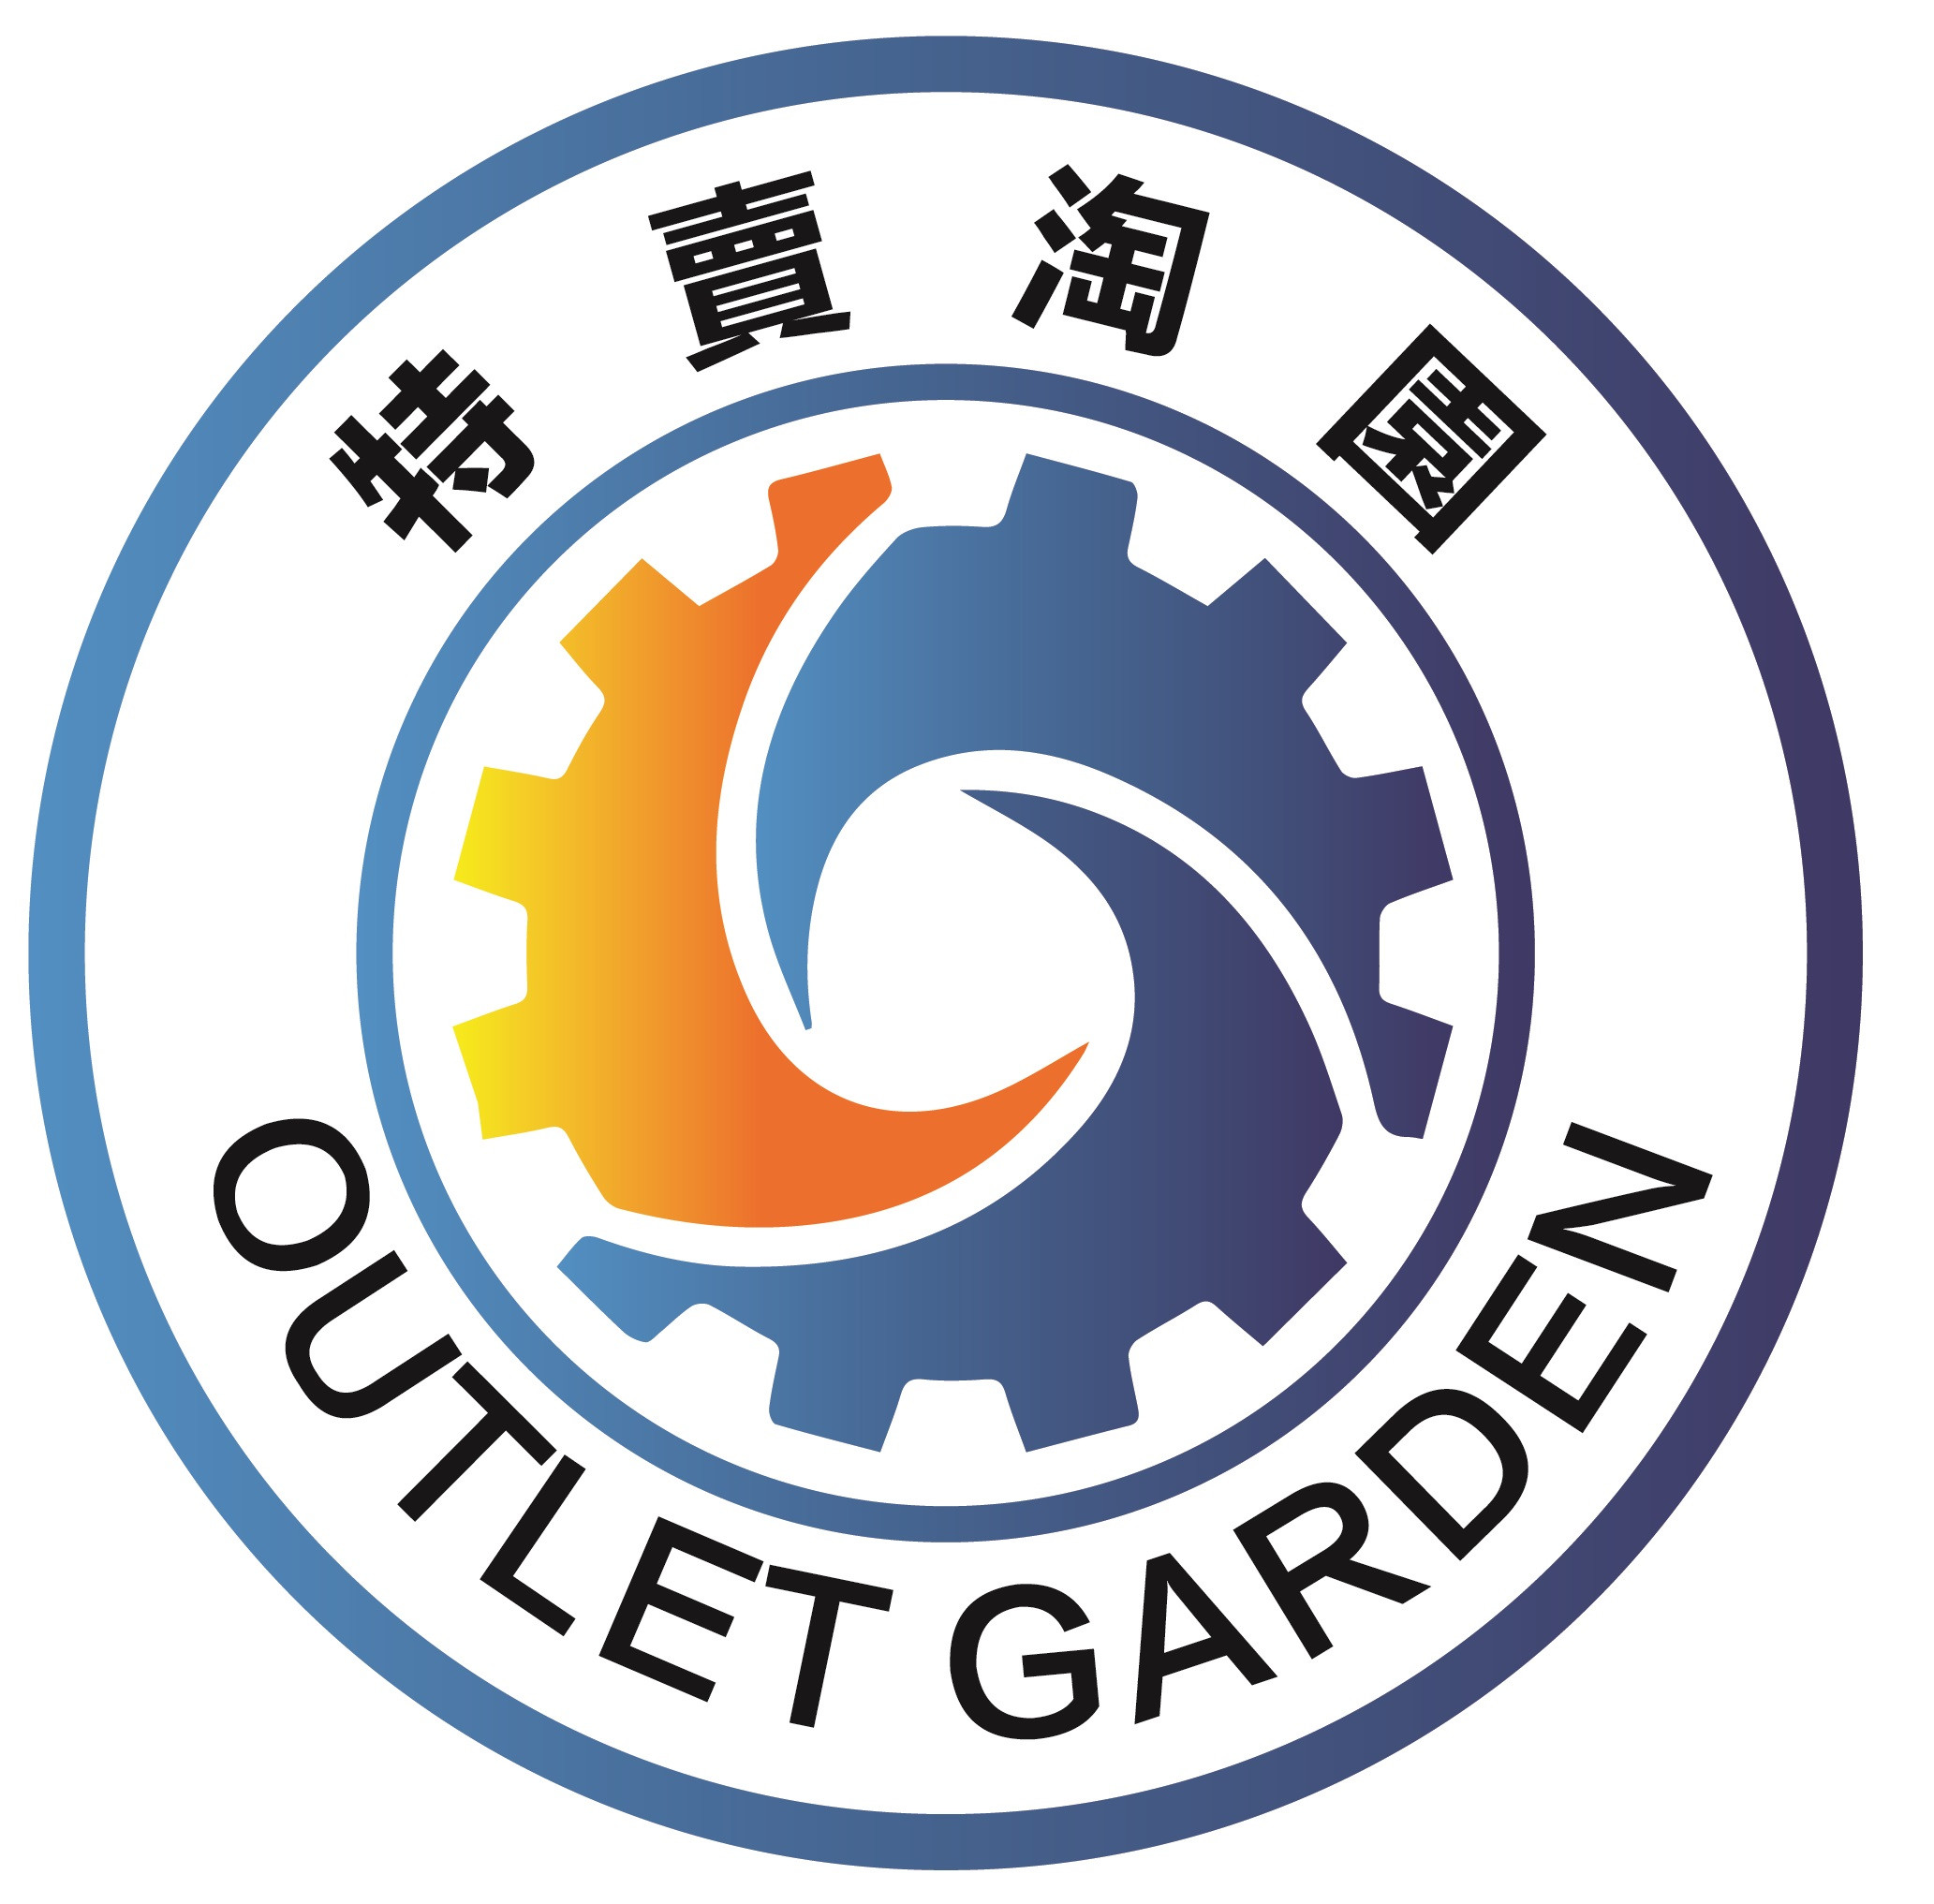 Outlet Garden - 特賣淘園